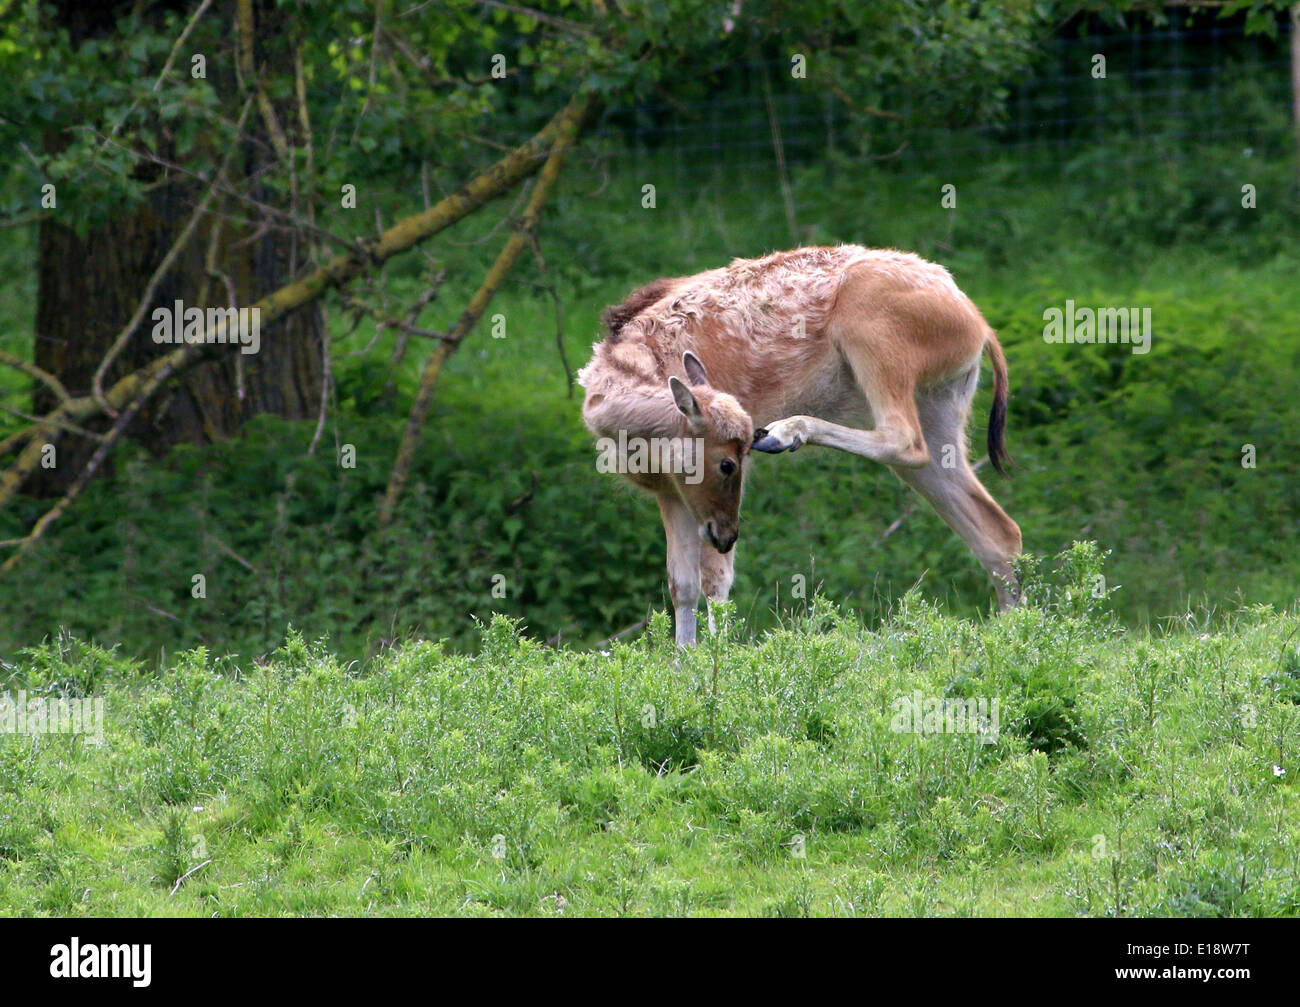 Moulting Père David's deer (Elaphurus davidianus) with an itch Stock Photo